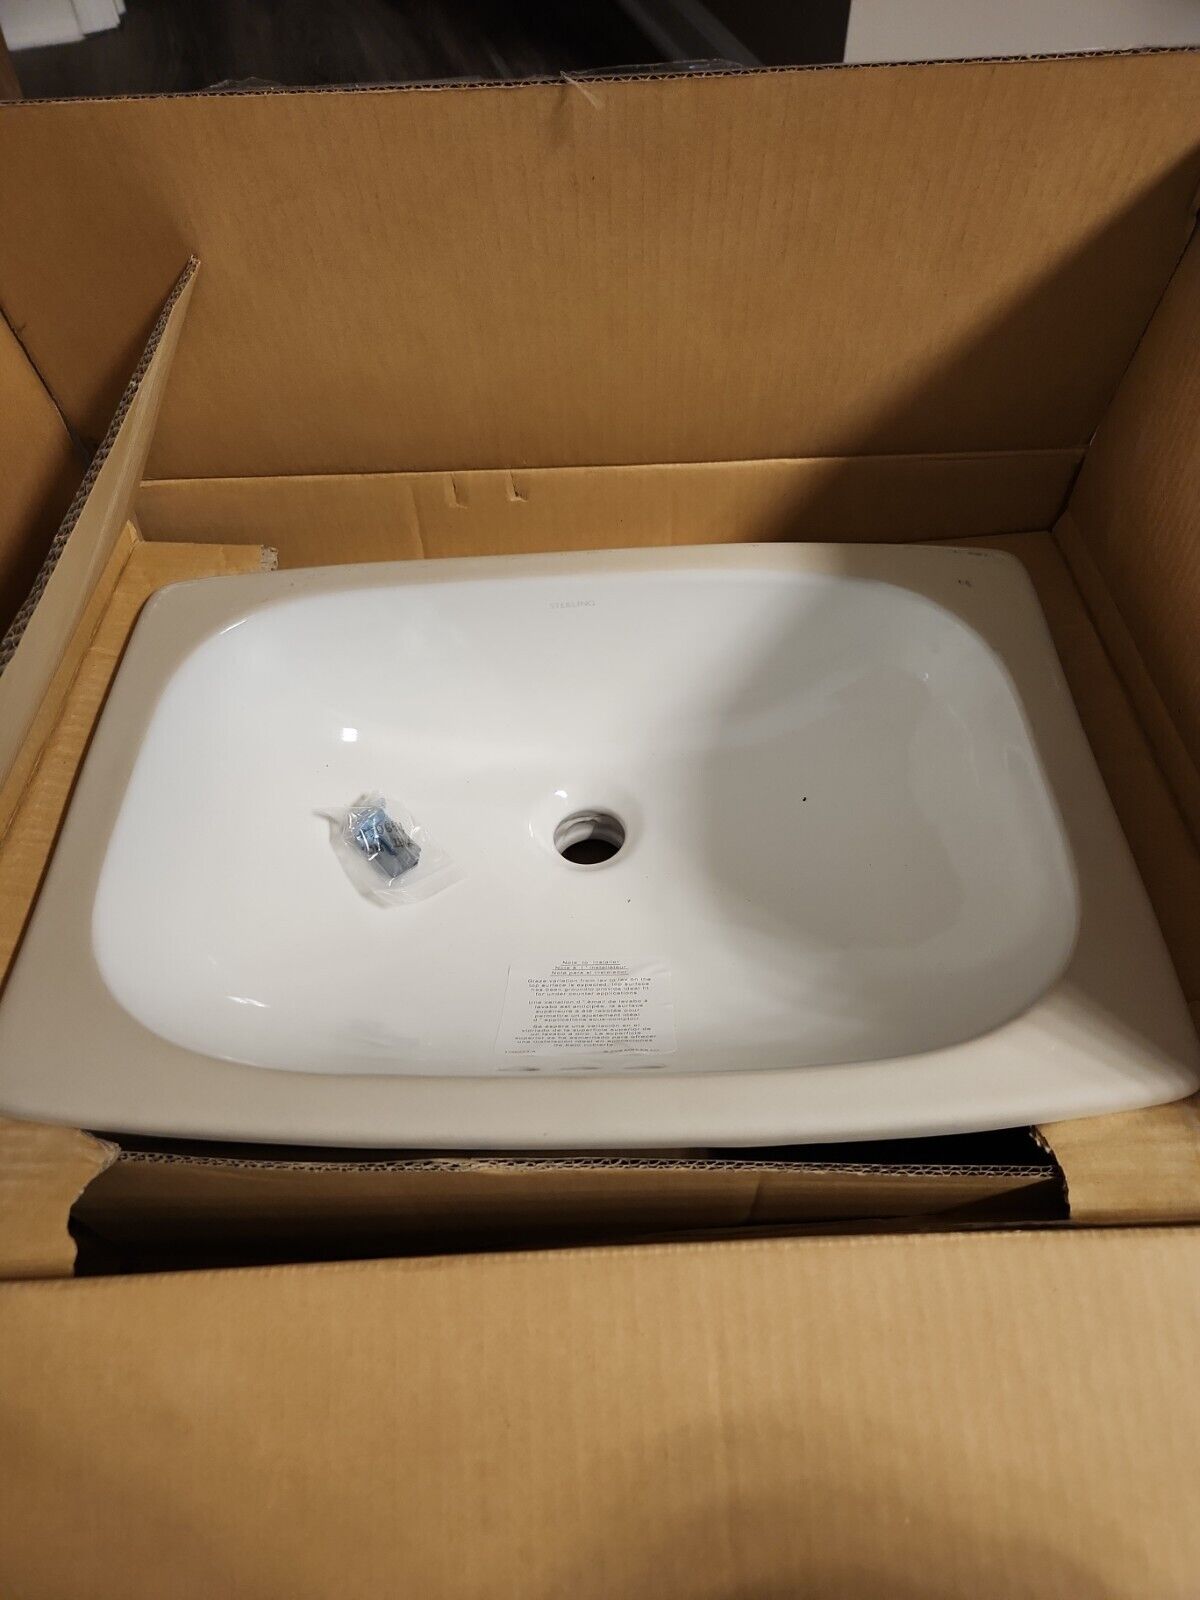 STERLING-442007-U-0 Stinson Under-Mounted Bathroom Sink in White*NEW*